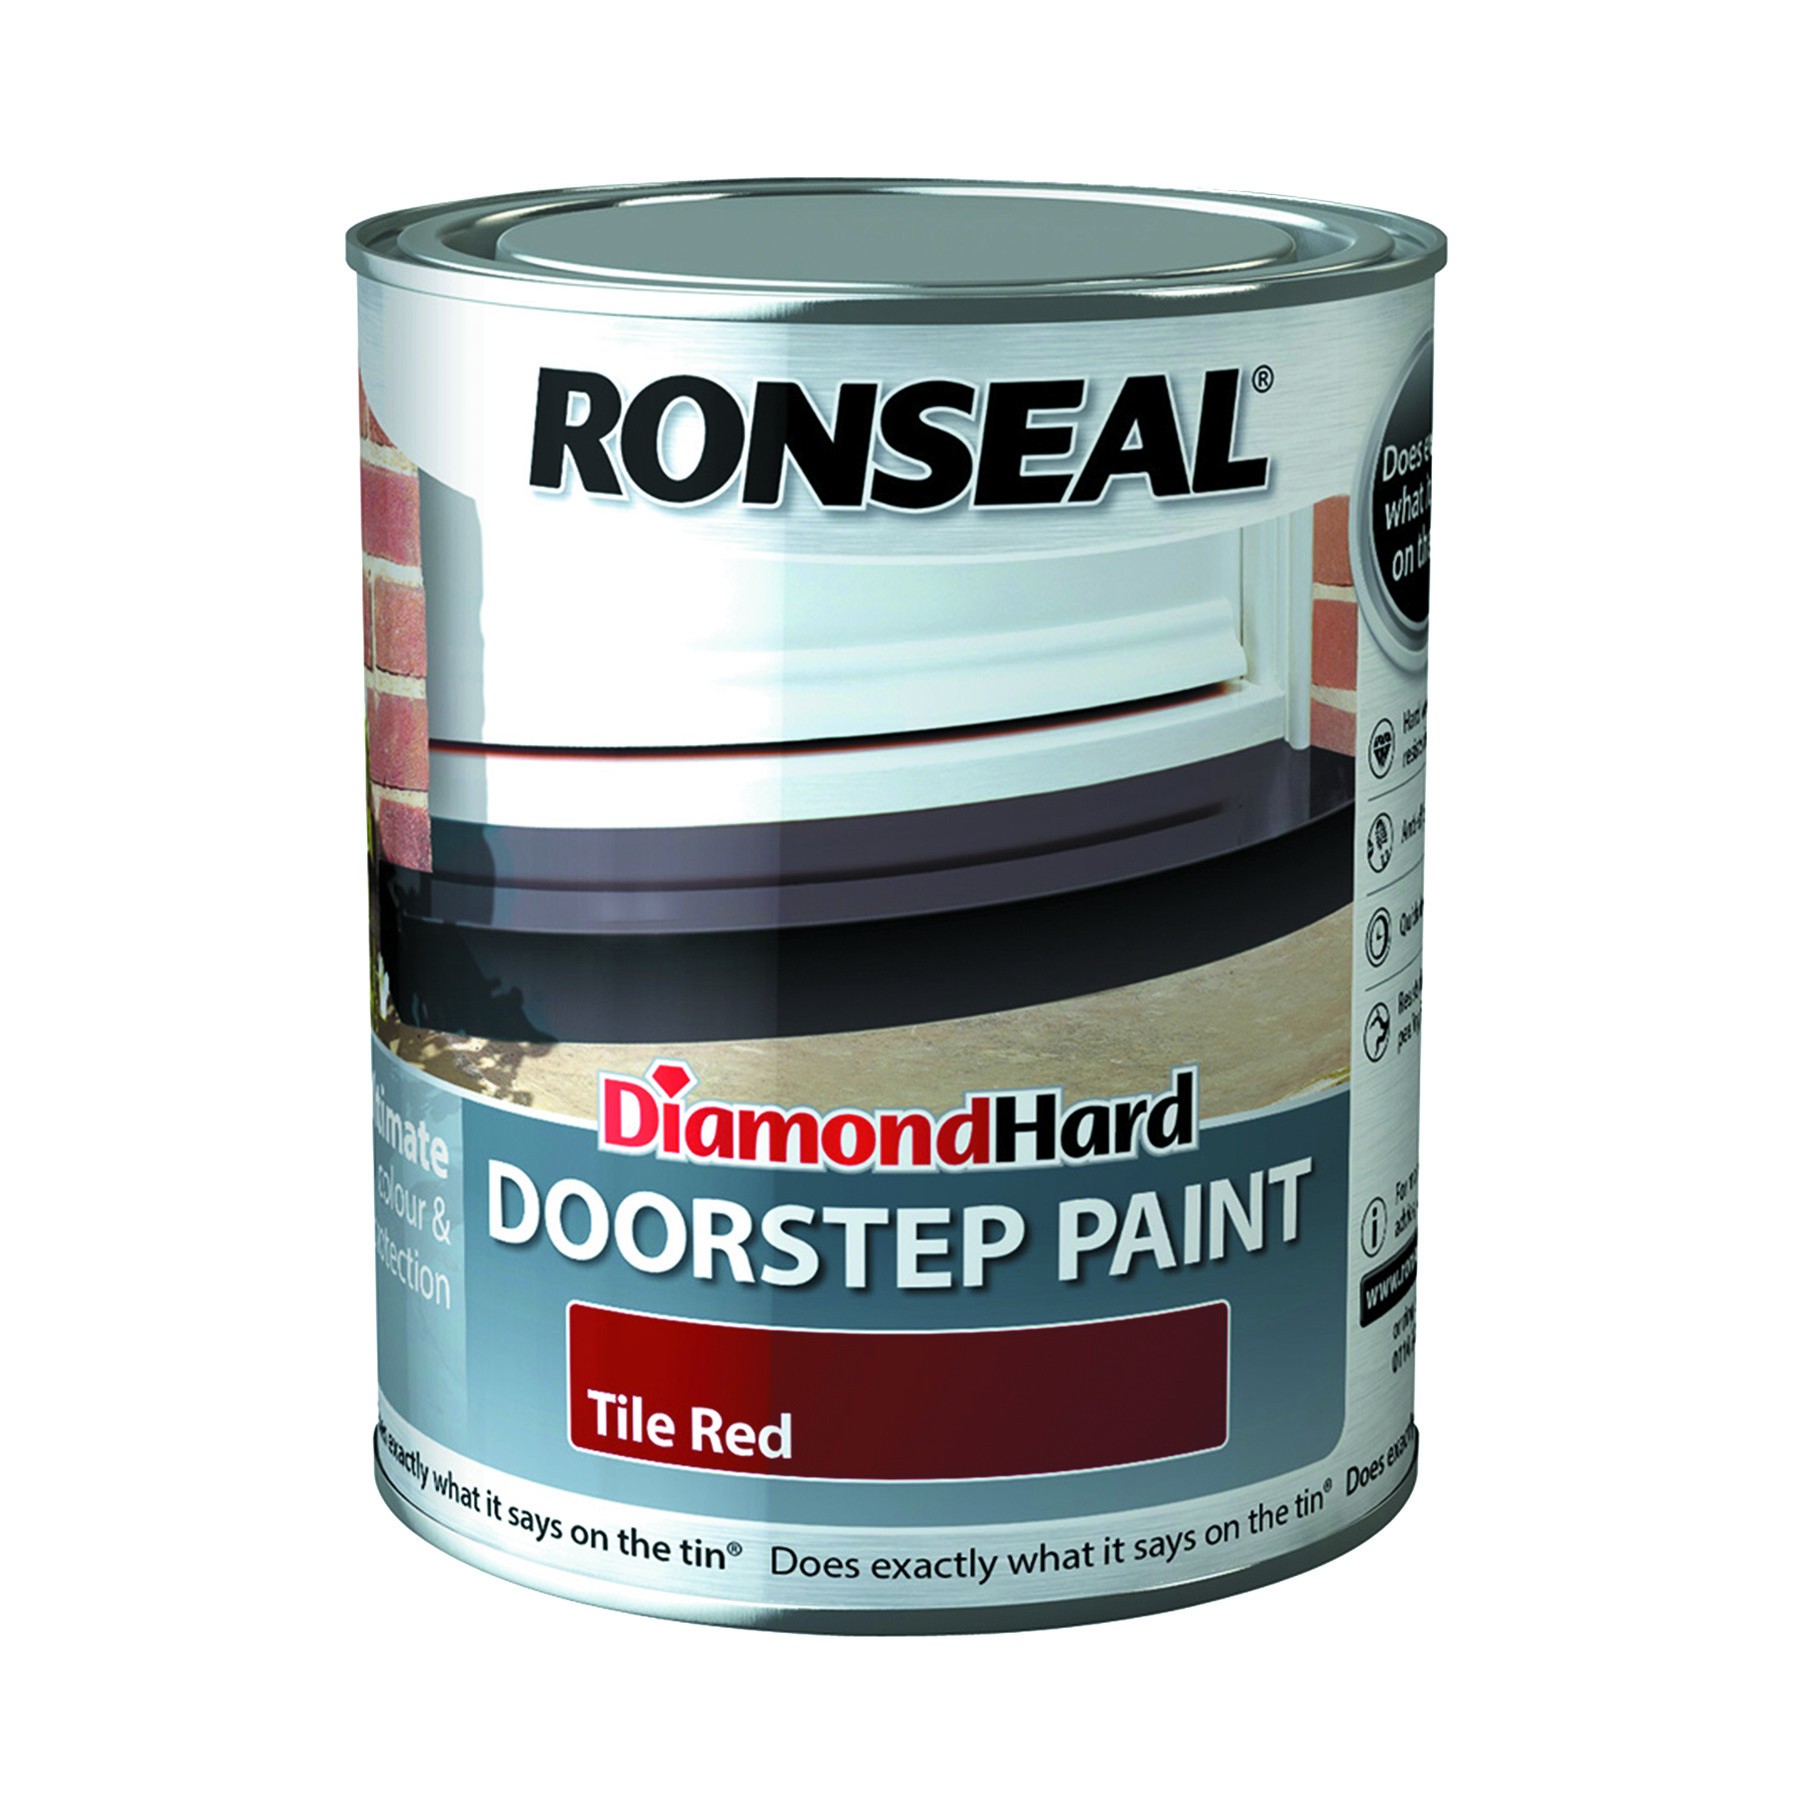 Ronseal Diamond Hard Doorstep Paint 250ml Tile Red [SRR36658]